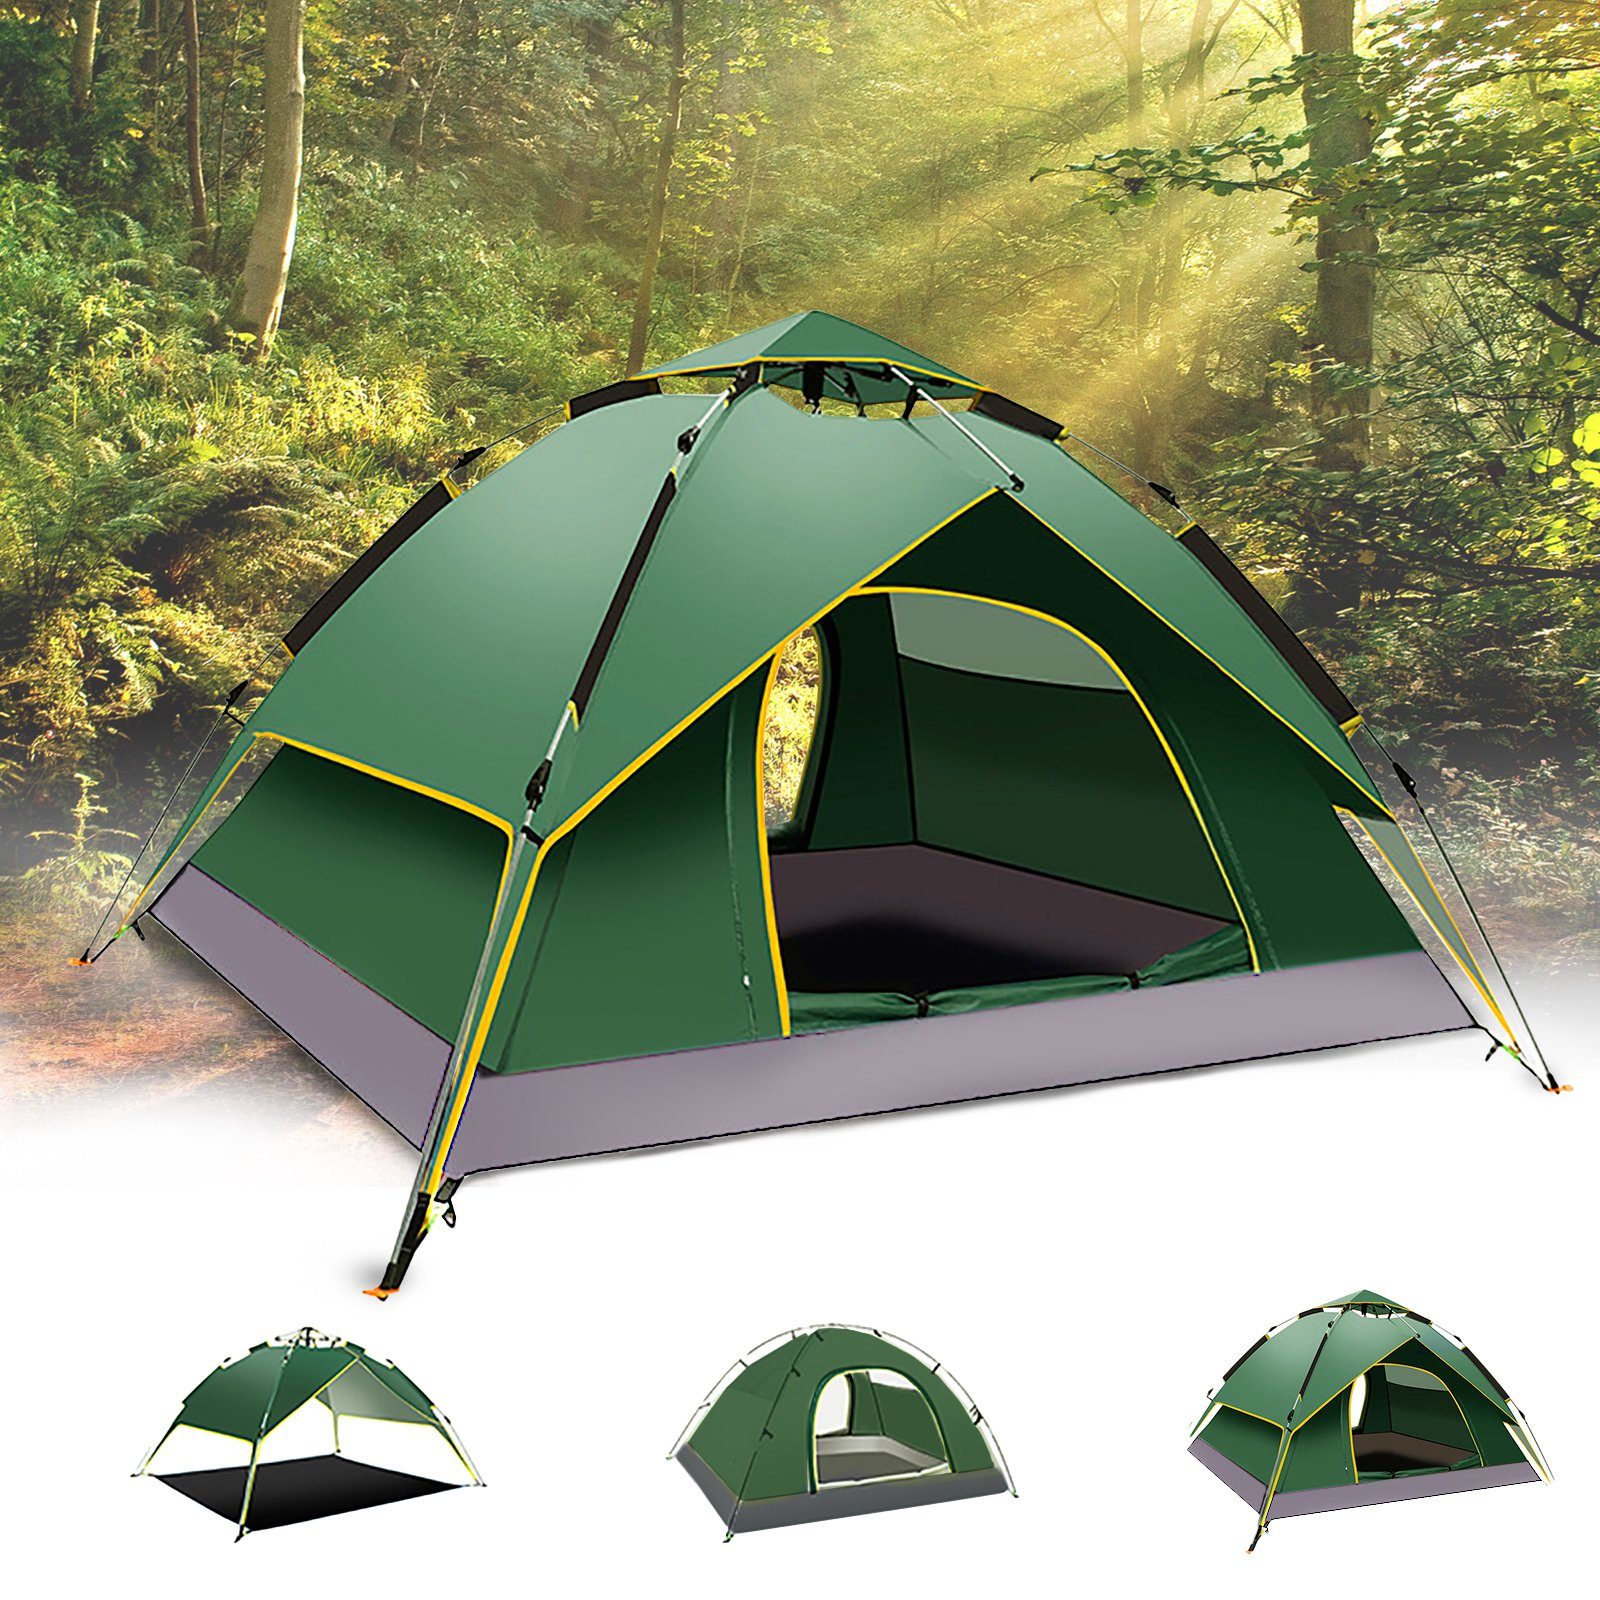 Campingausrüstung online kaufen » Camping-Gadgets